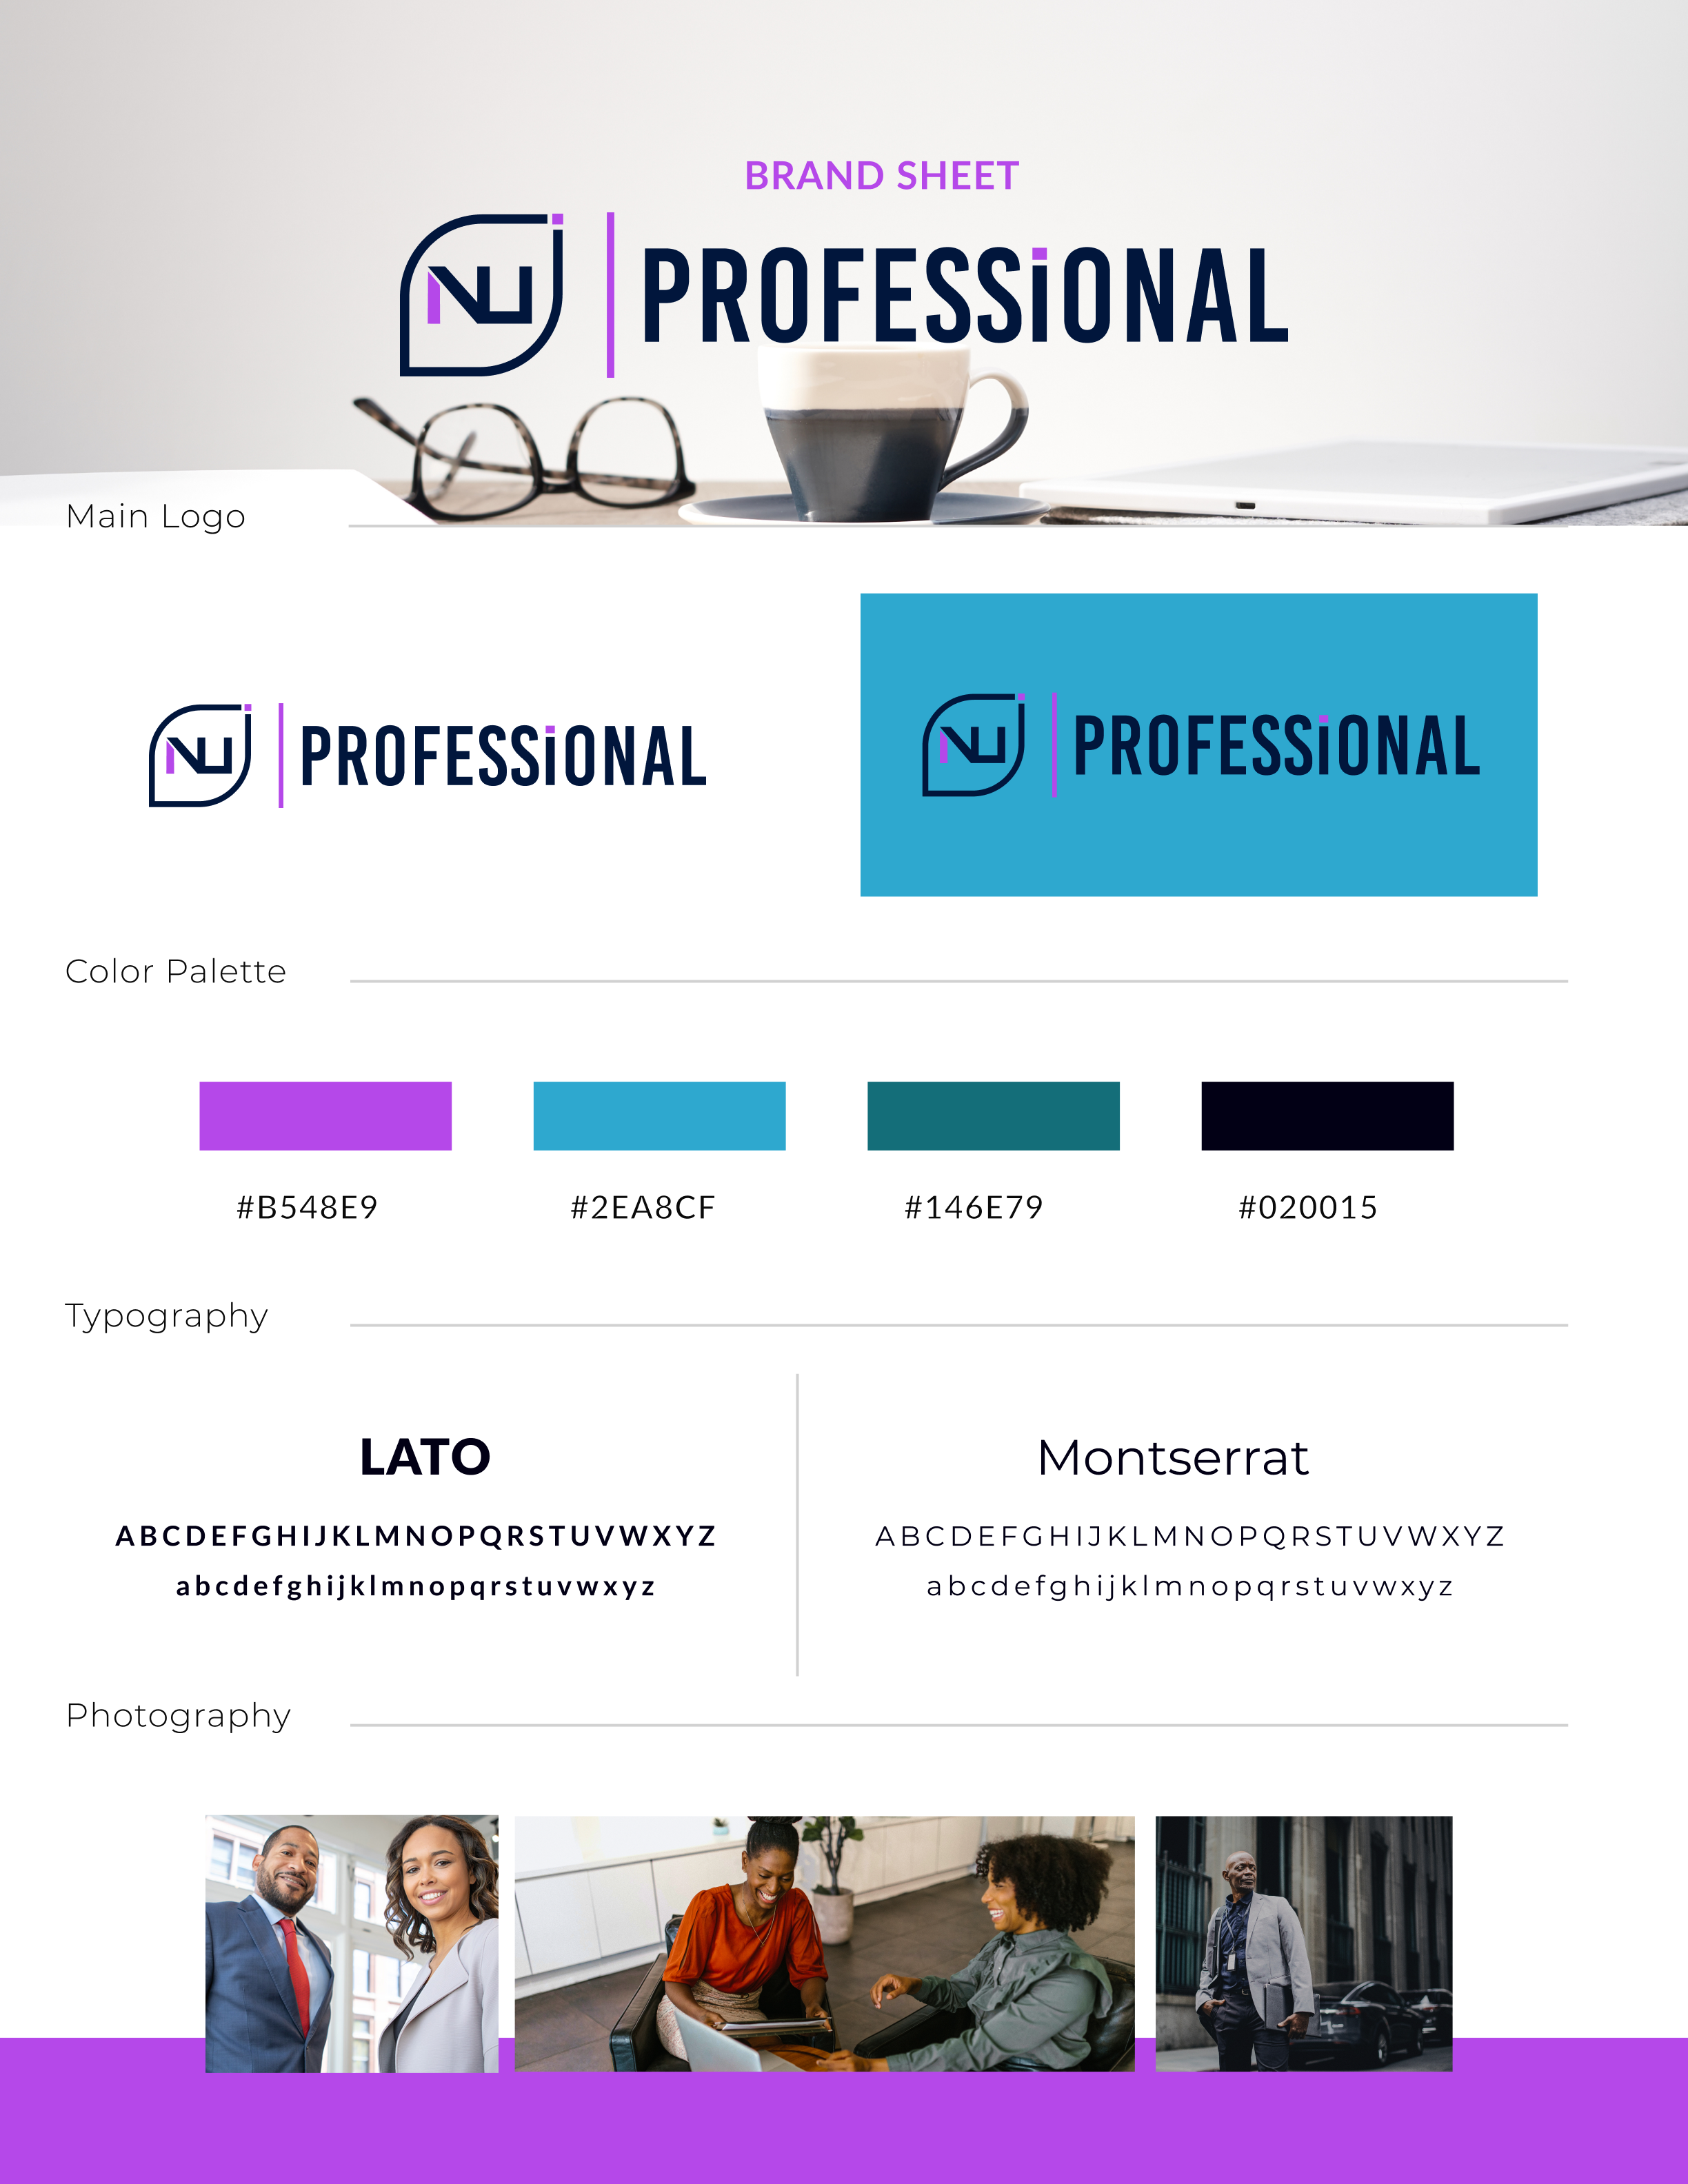 NuProfessional NuProject Logo Brand Sheet